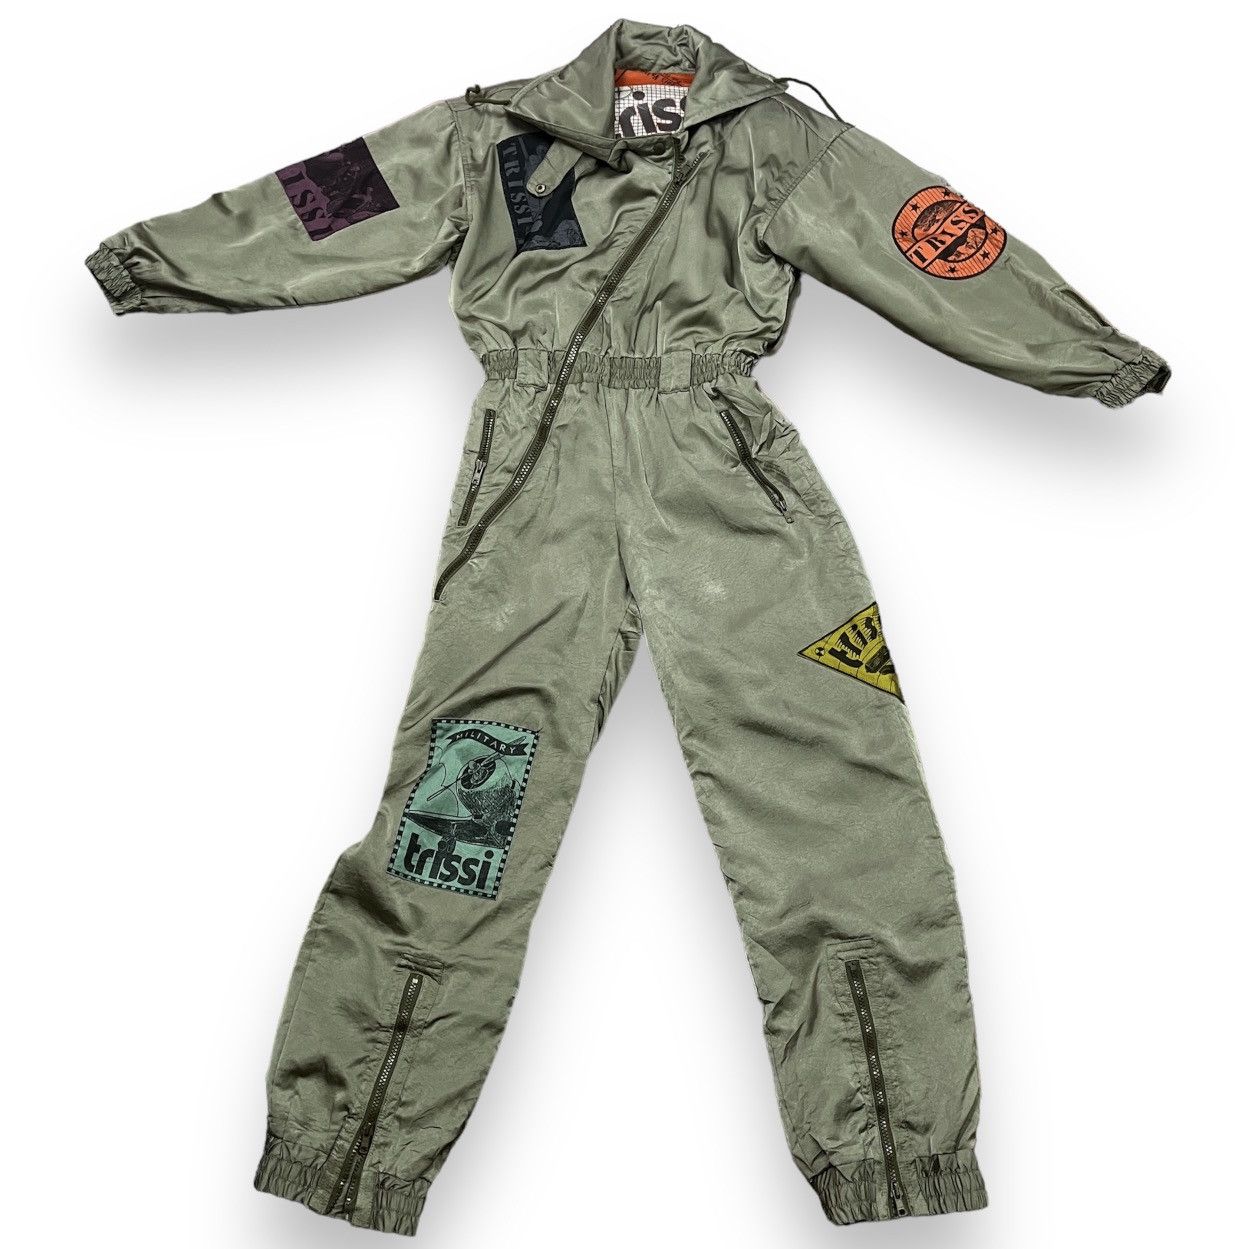 Vintage - Japan Trissi Specialist Parachute Jumpsuit Overall Jacket - 3